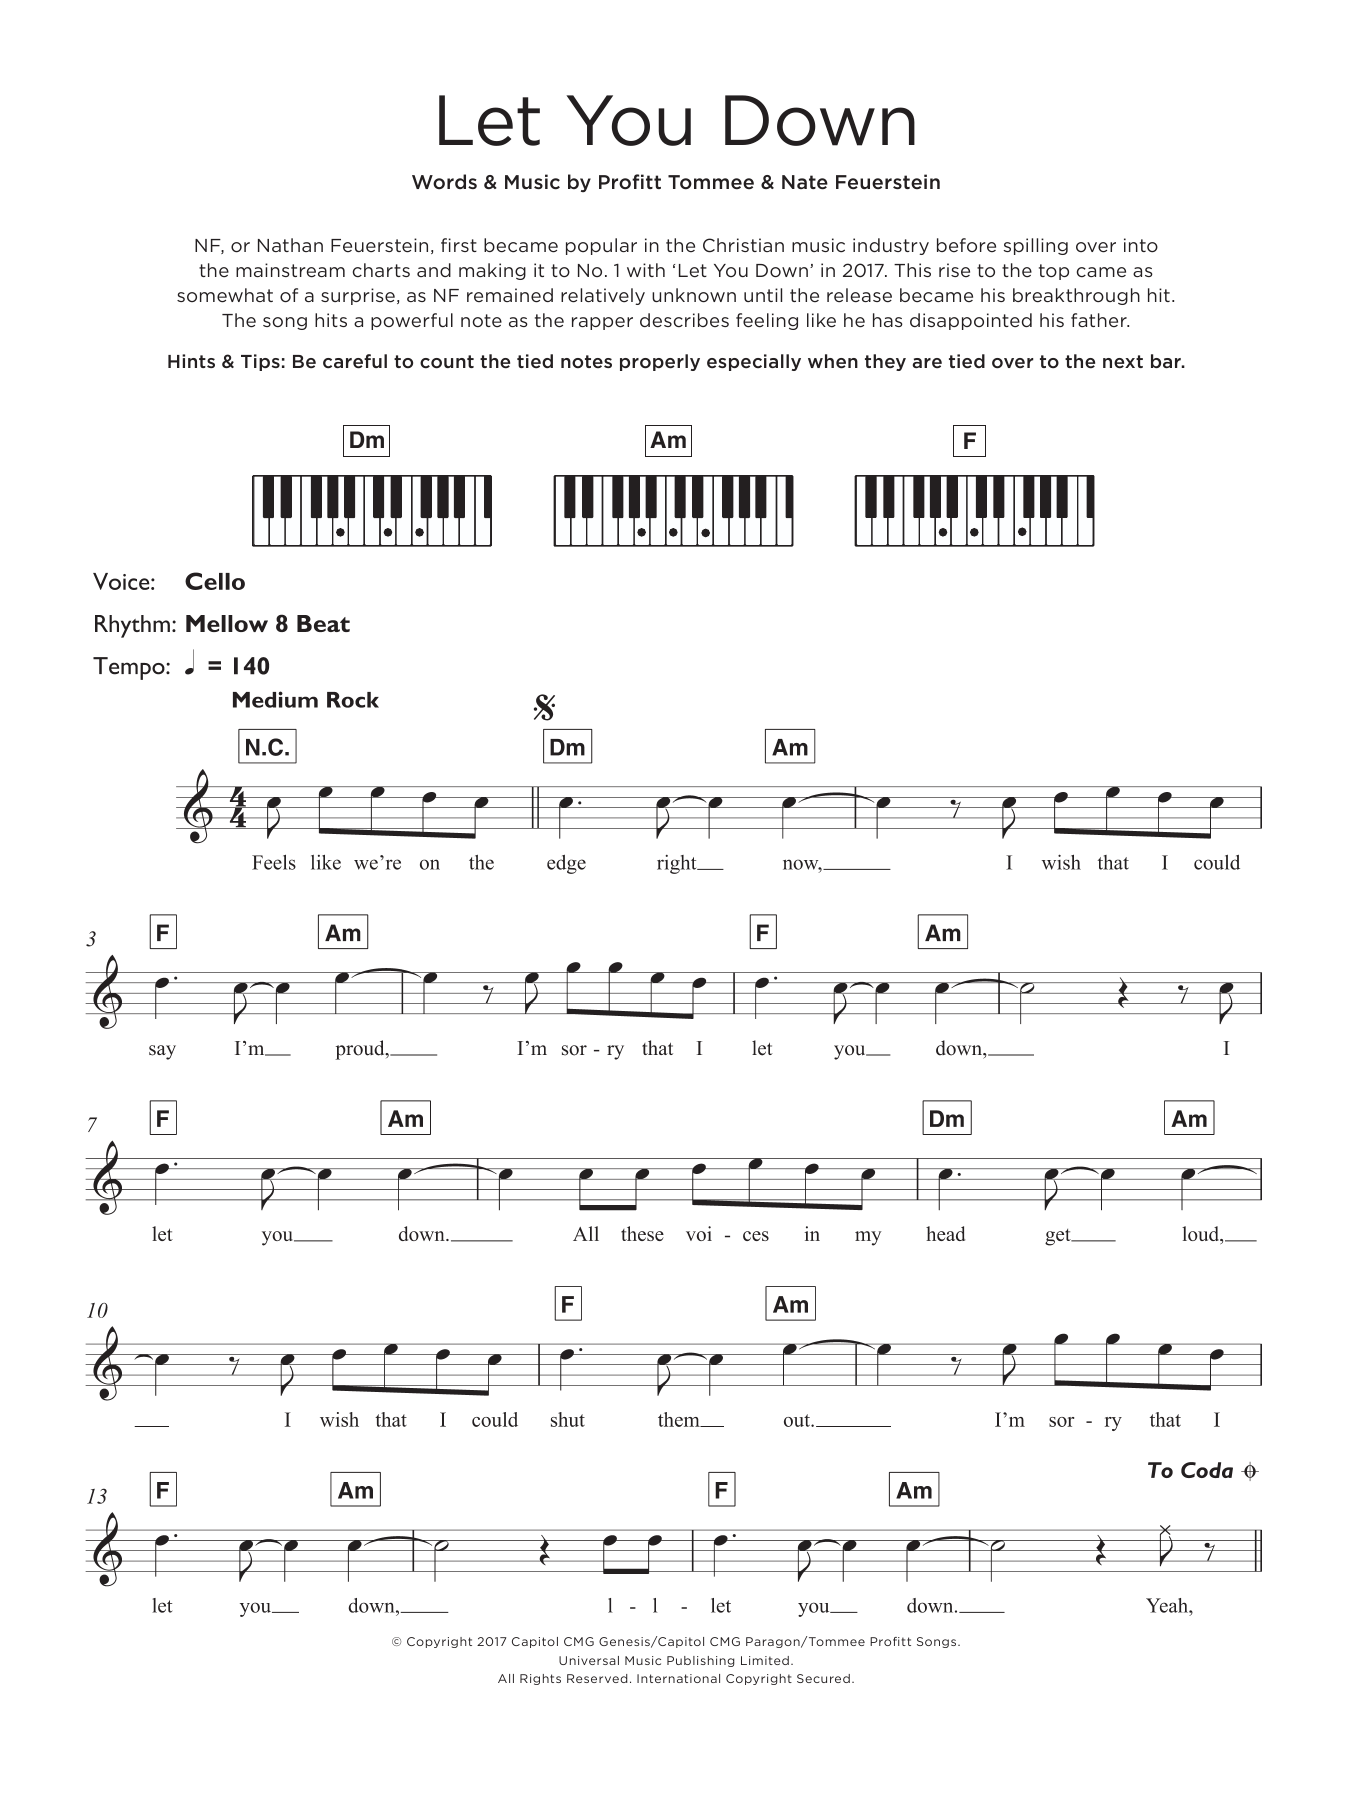 NF Let You Down Sheet Music Notes & Chords for Beginner Ukulele - Download or Print PDF